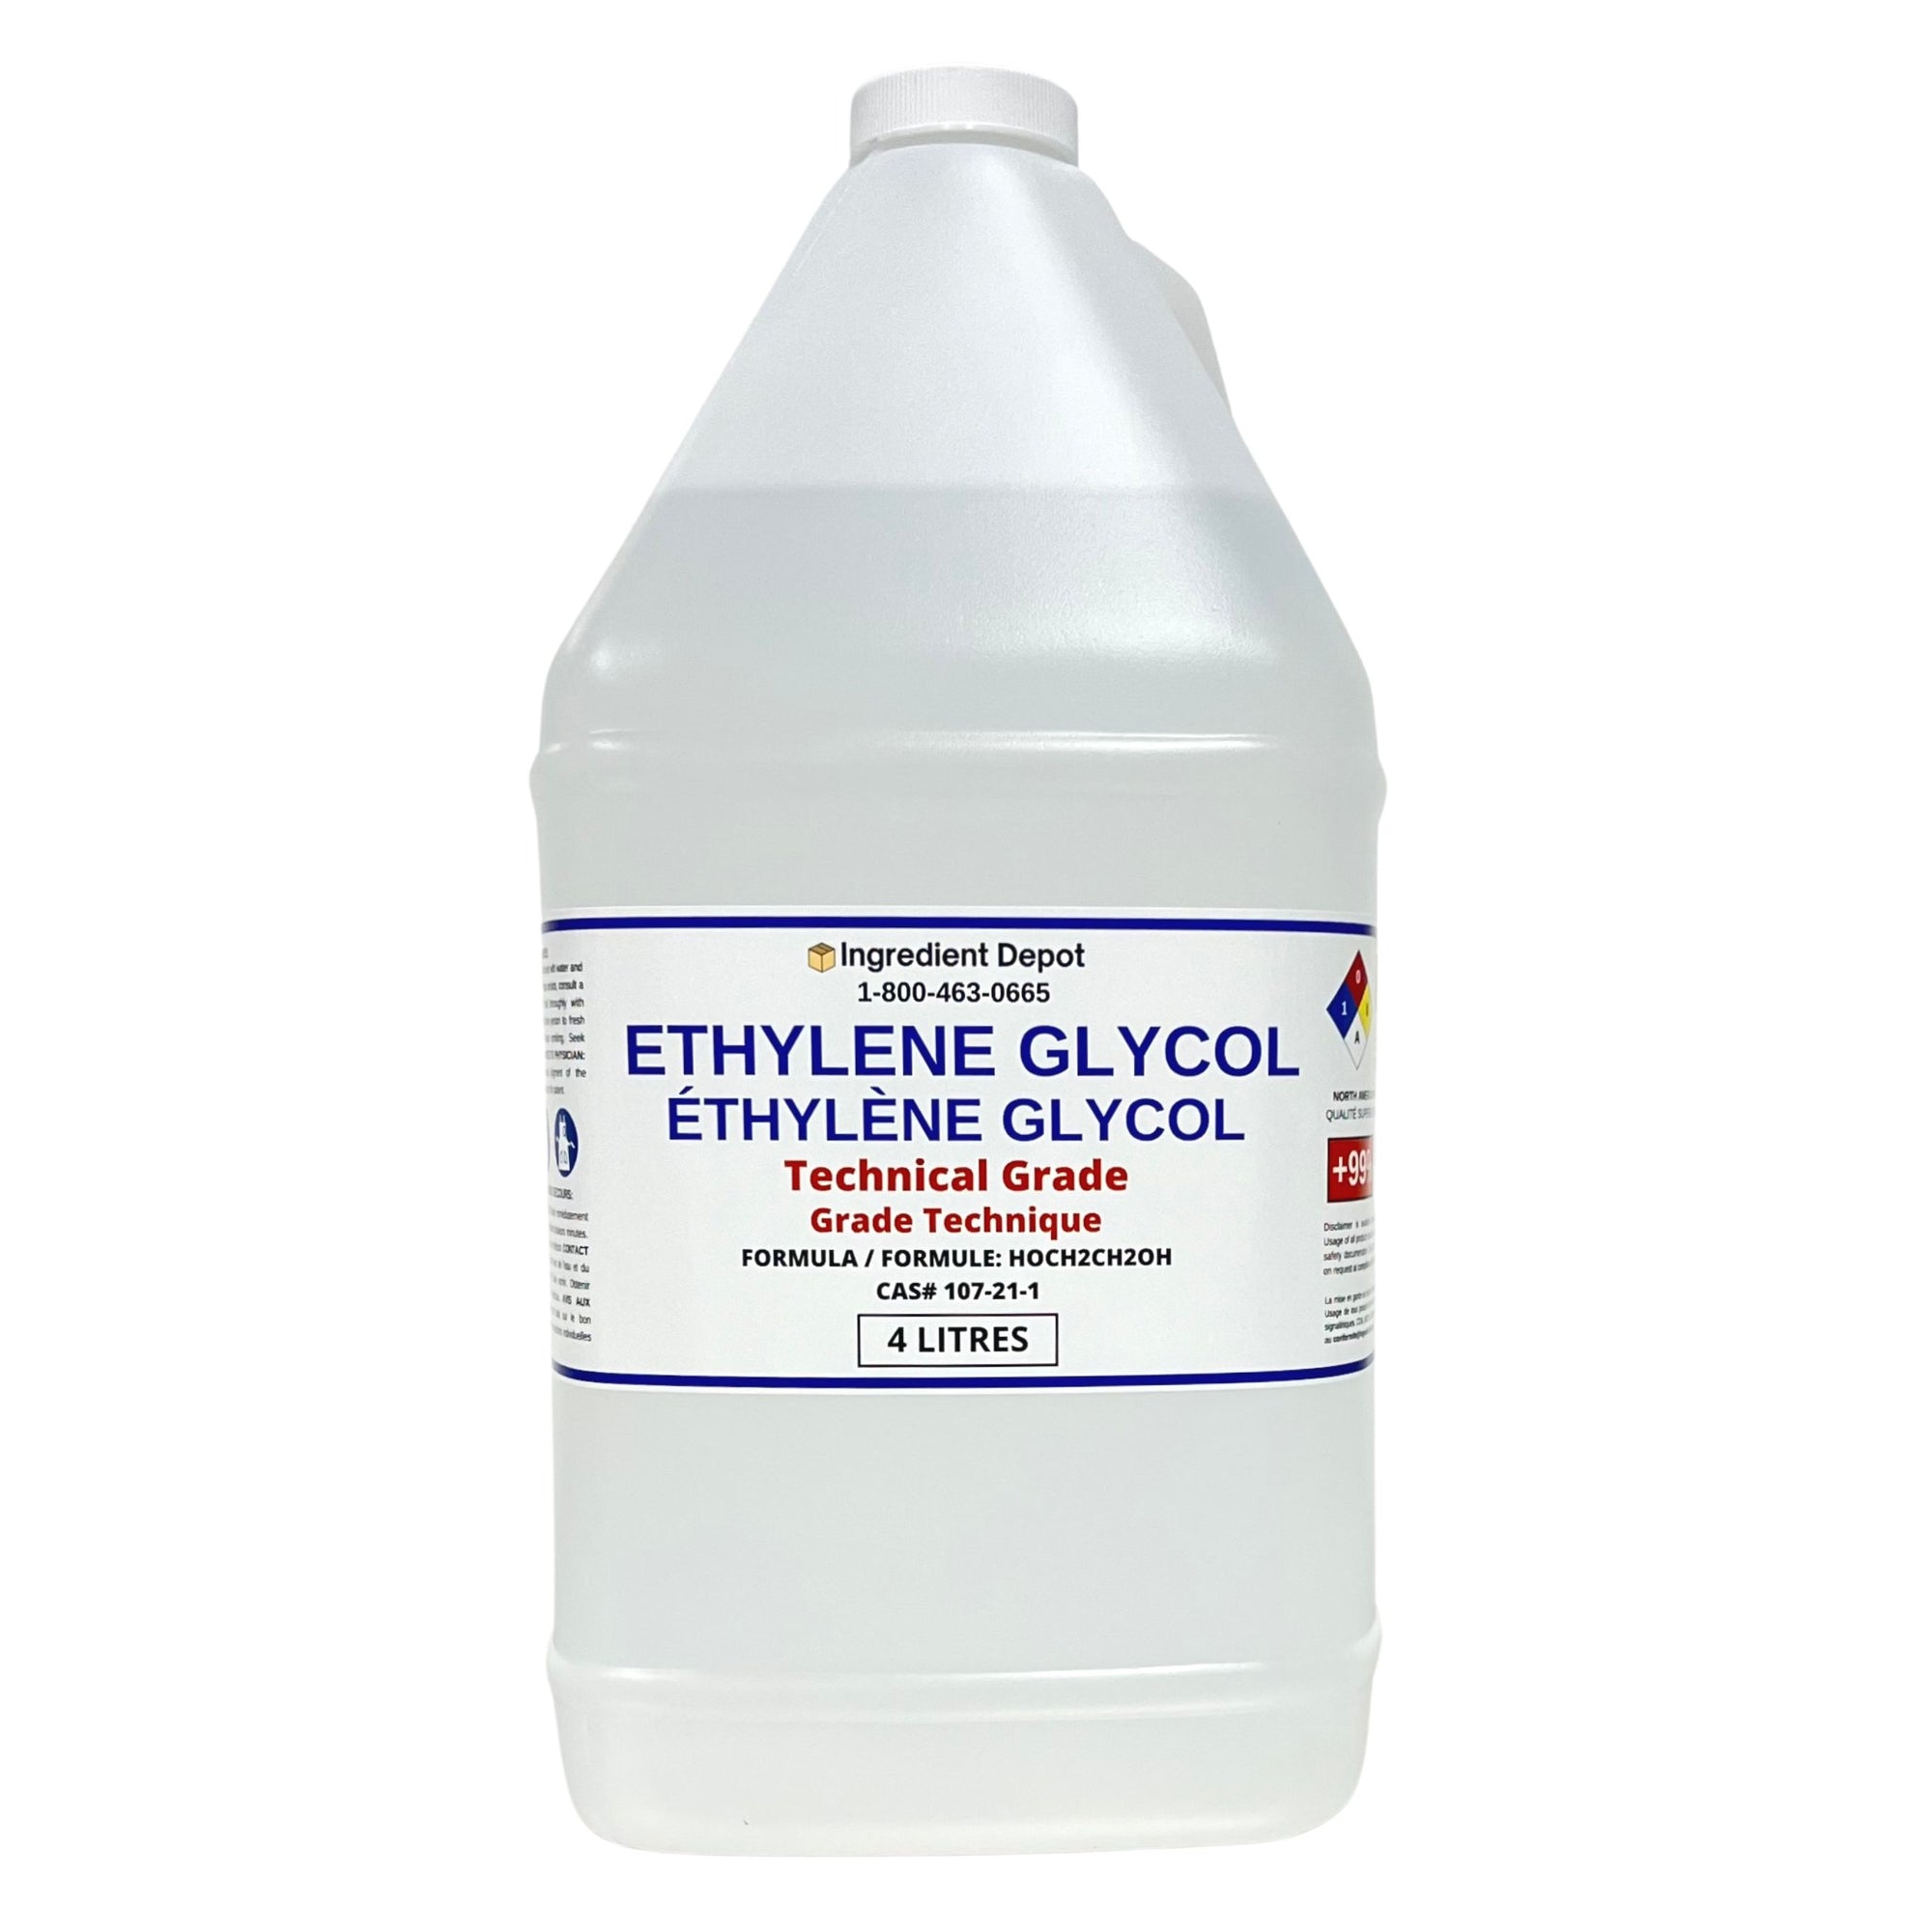 Ethylene Glycol Technical Grade 4 litres